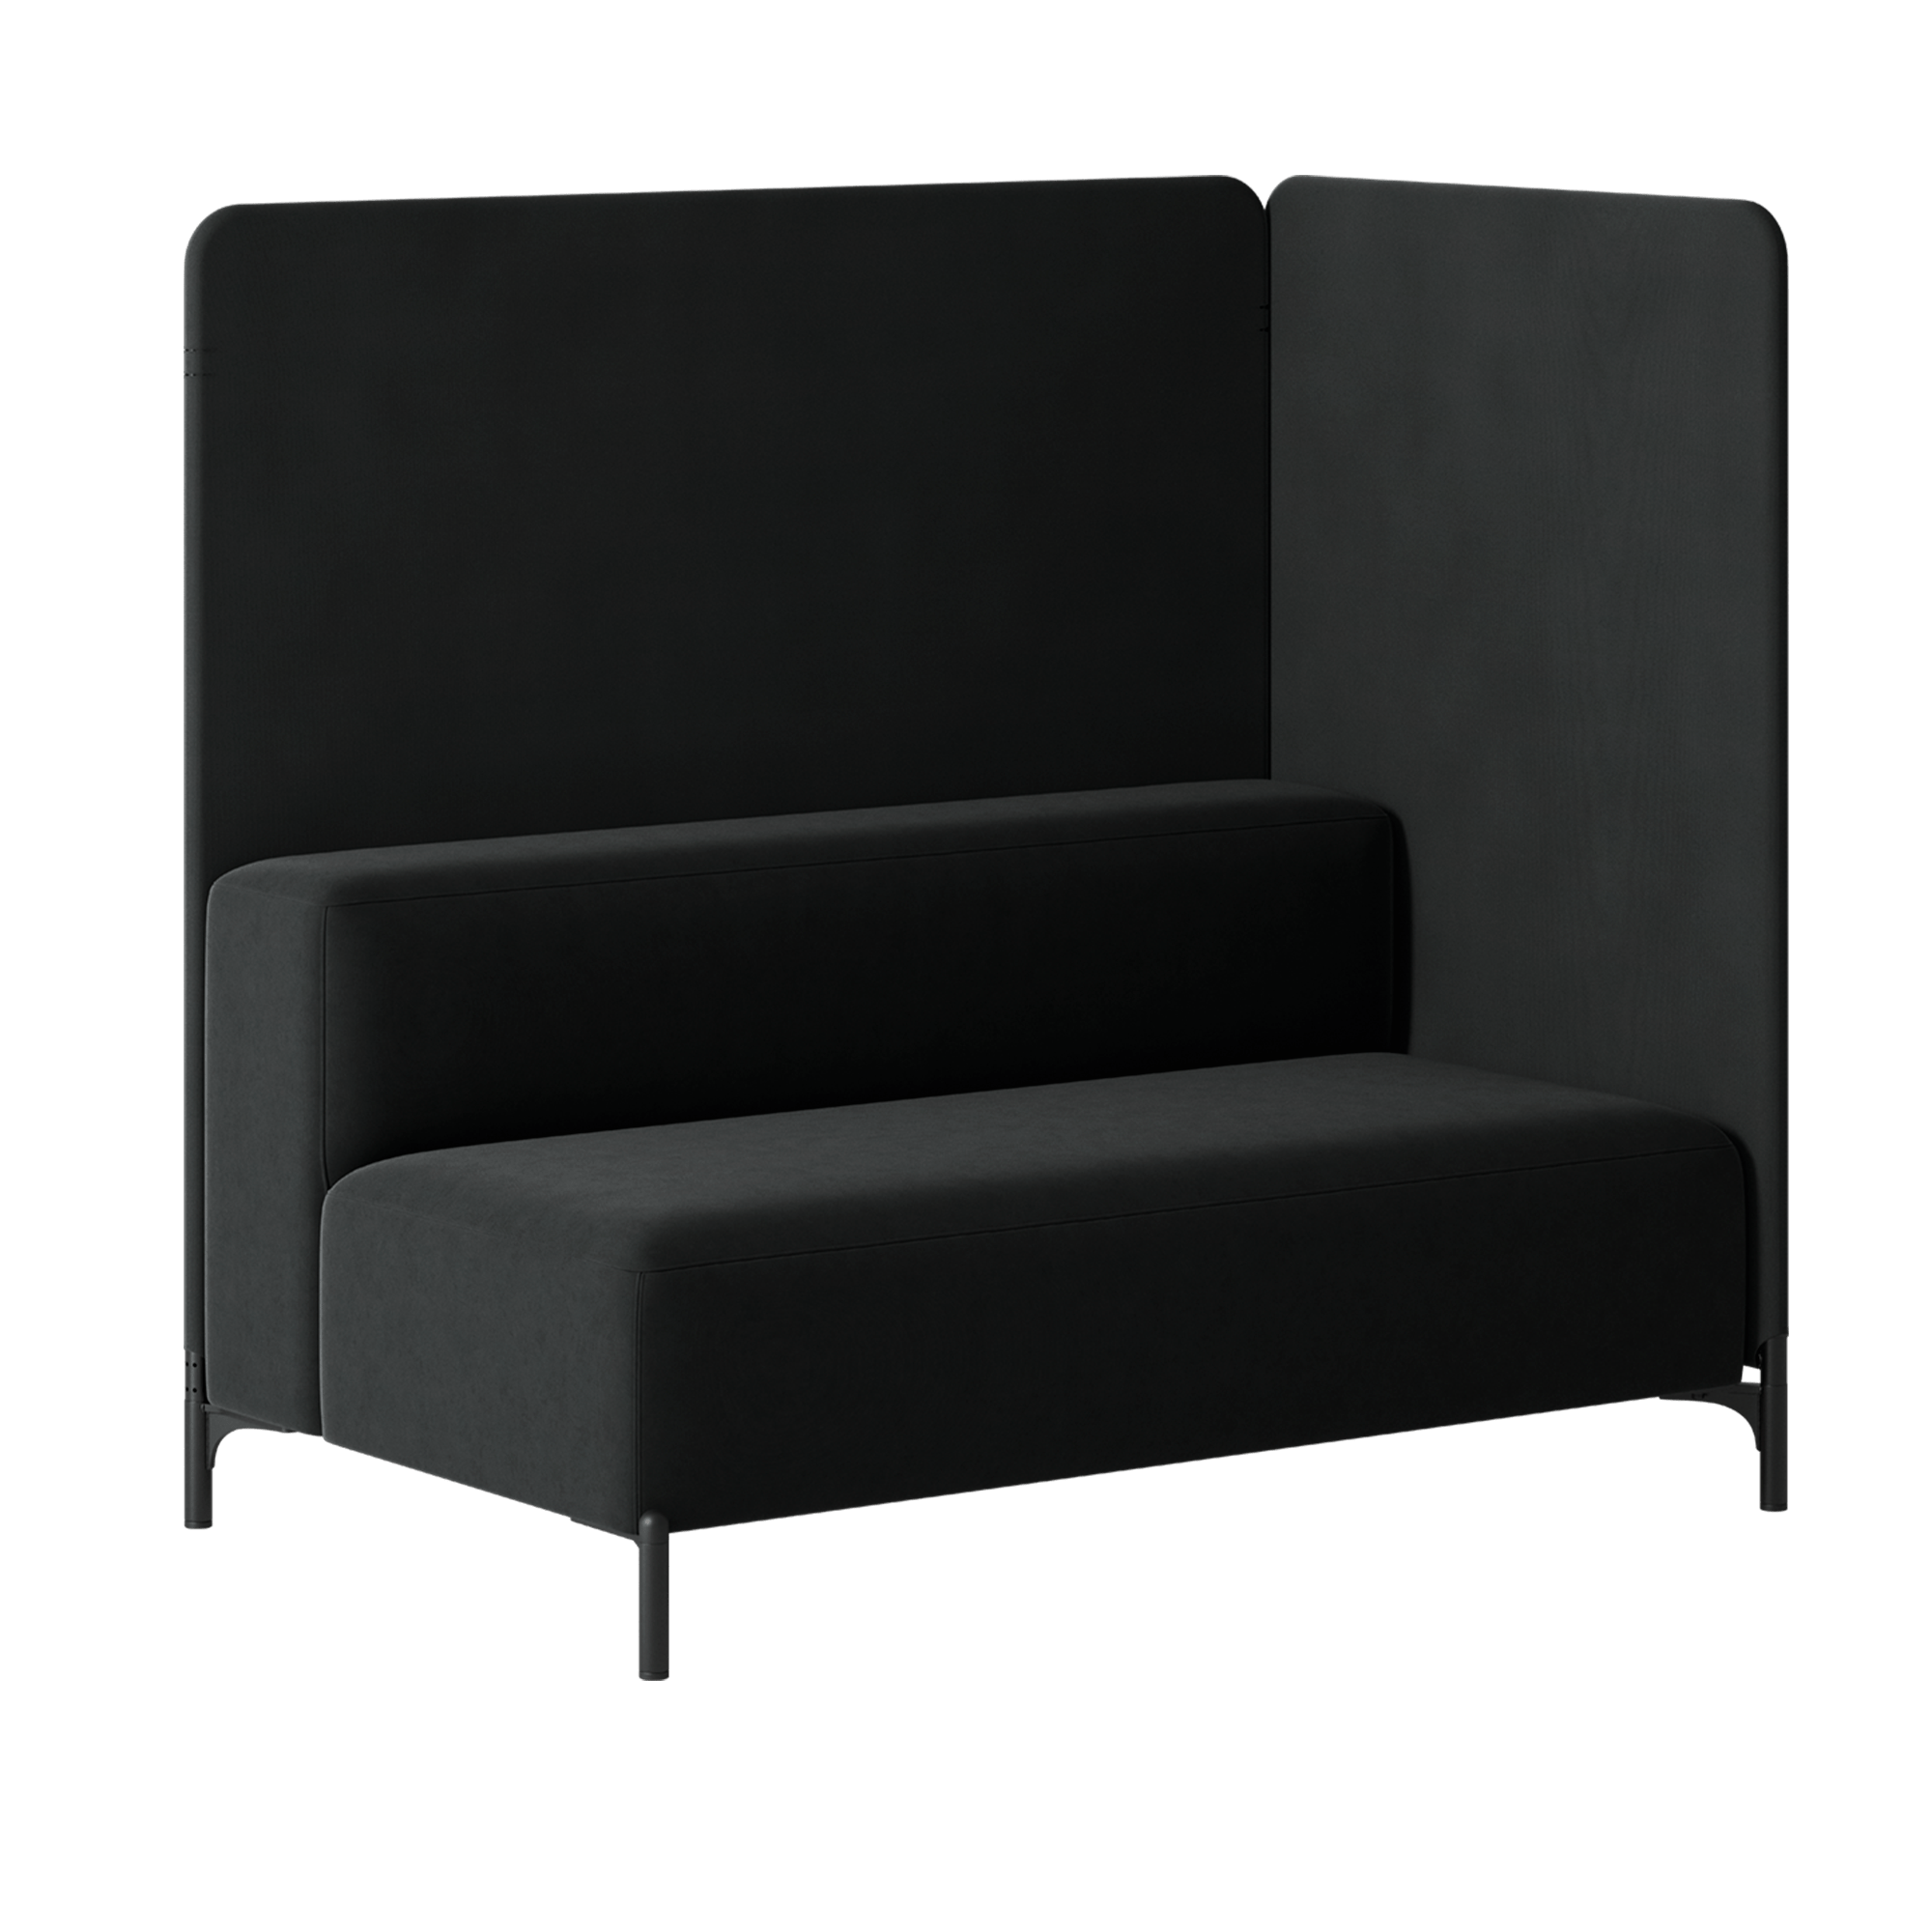 A black sofa with a black divider.